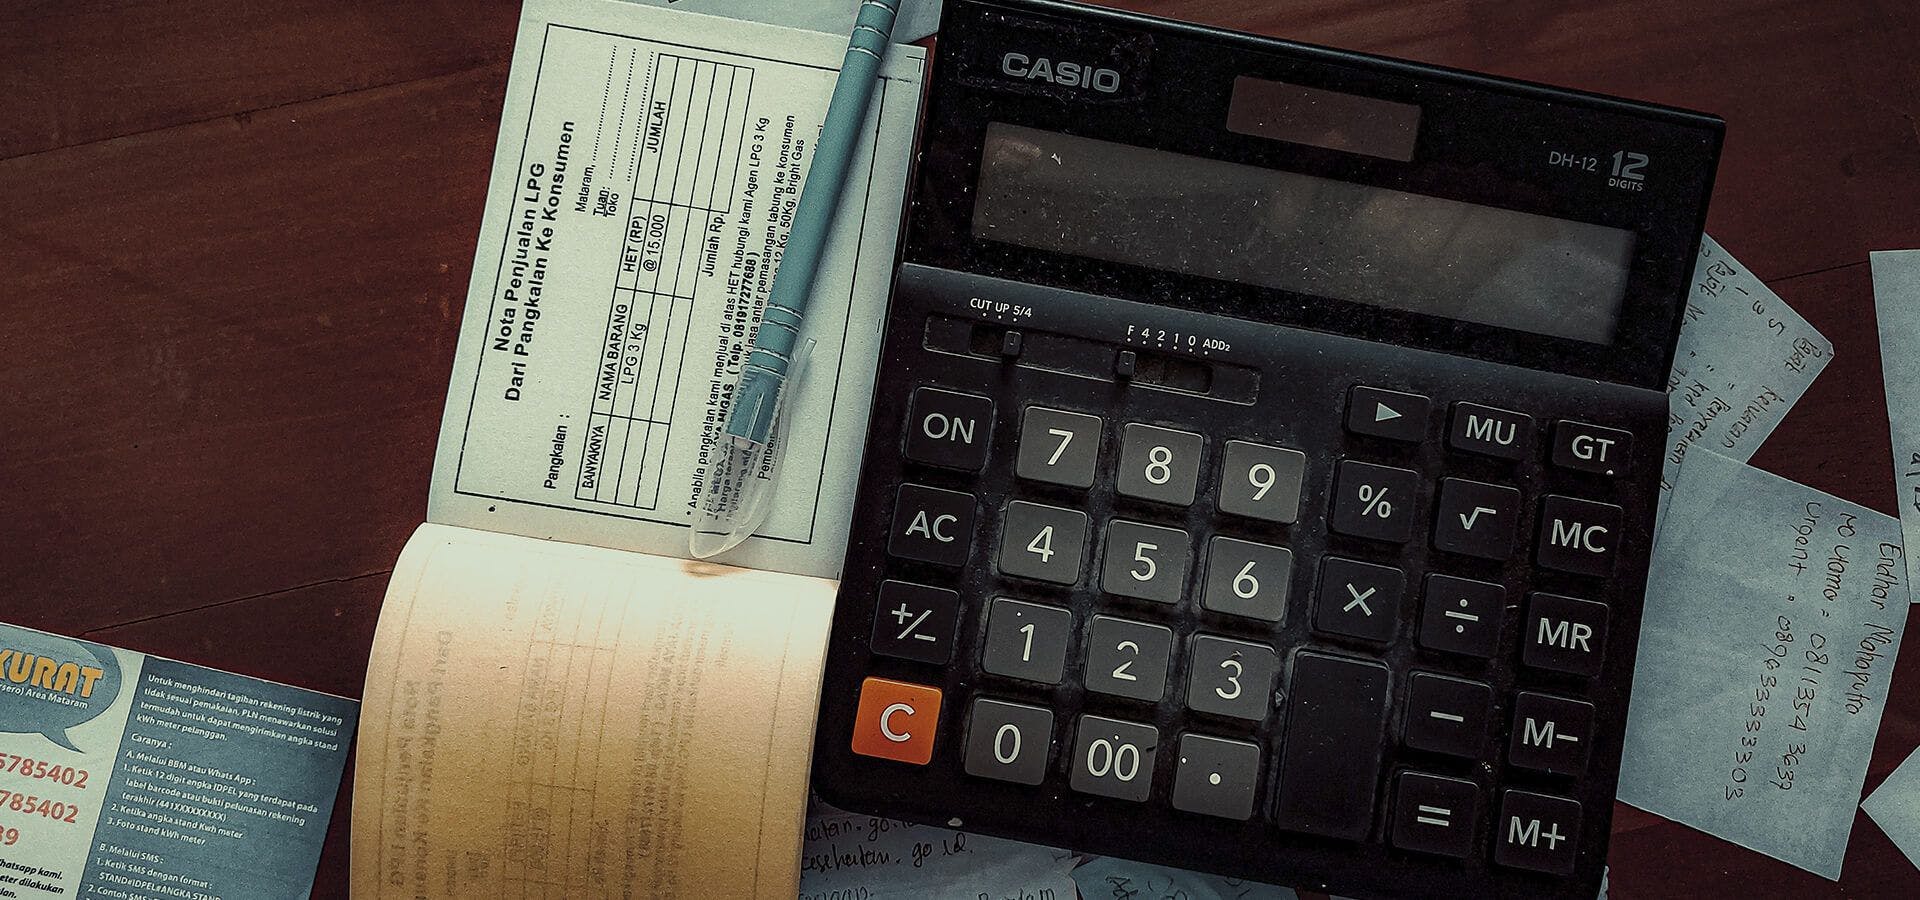 Calculadora antigua y papeles sobre un escritorio